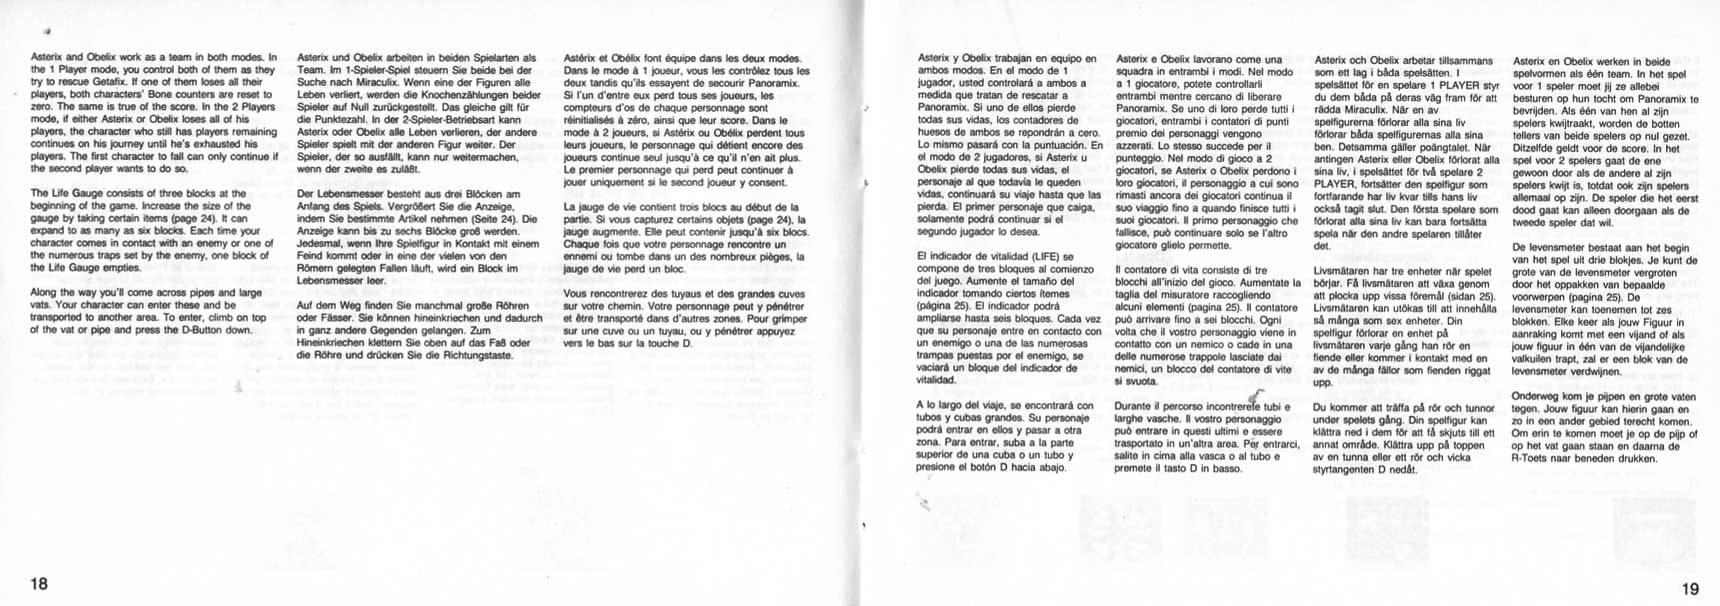 Astérix Jeux Master System Notice page 18-19